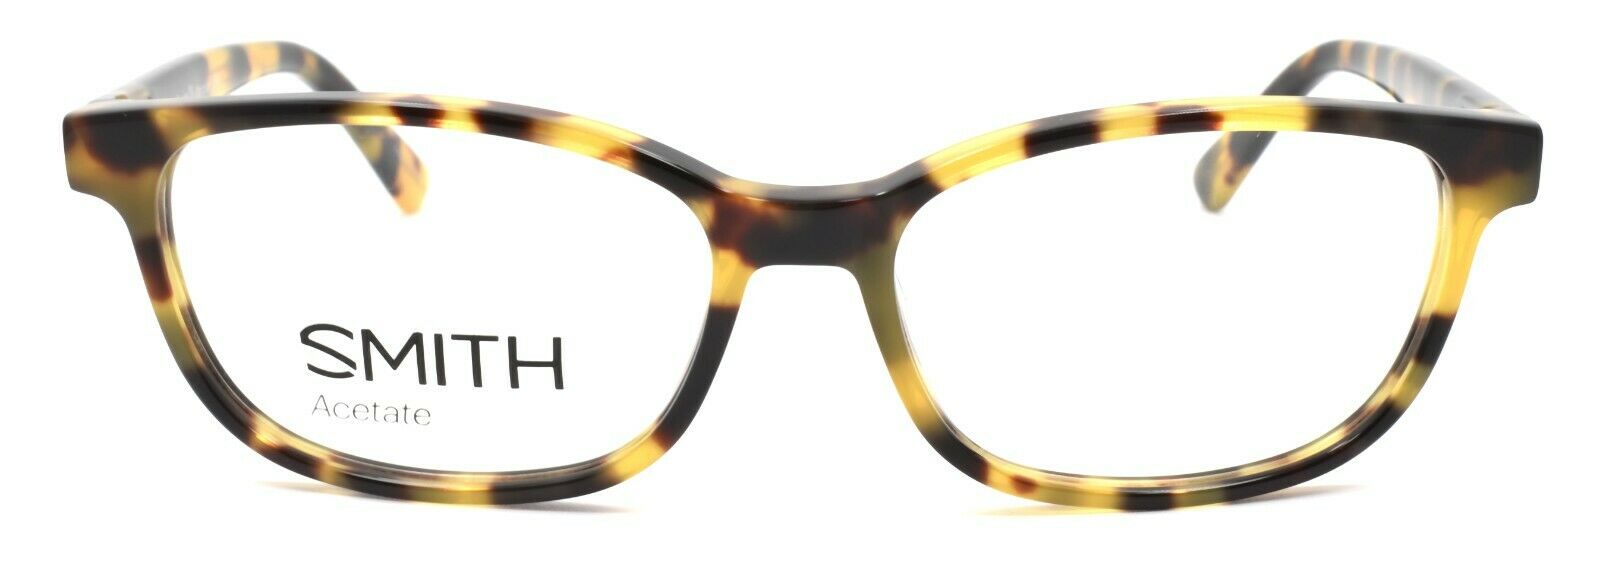 2-SMITH Optics Goodwin 0B9 Women's Eyeglasses Frames 51-15-130 Tortoise + CASE-762753230881-IKSpecs